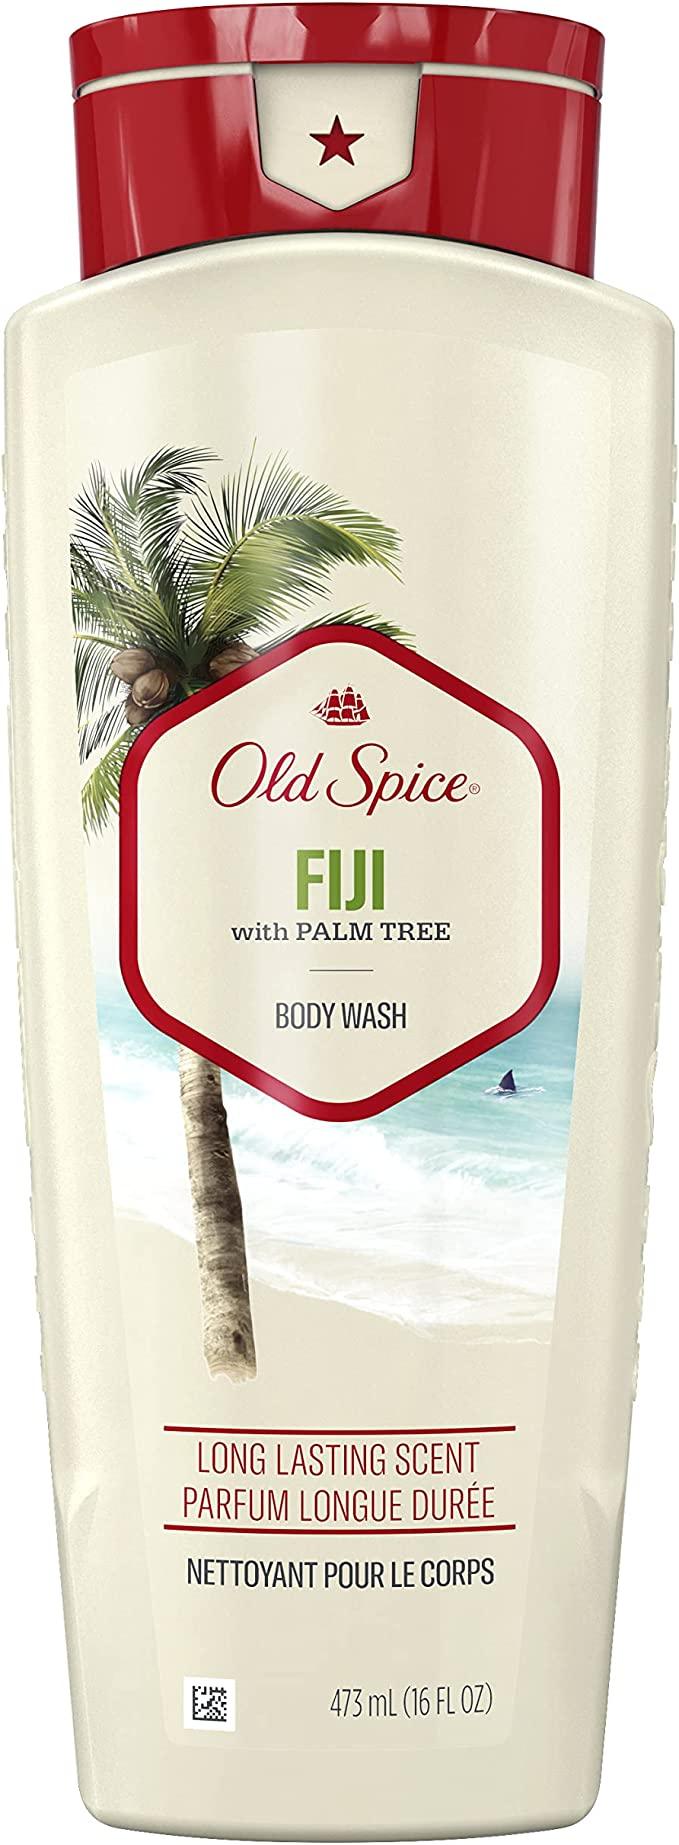 Old Spice Body Wash Fiji 473ml - Quecan